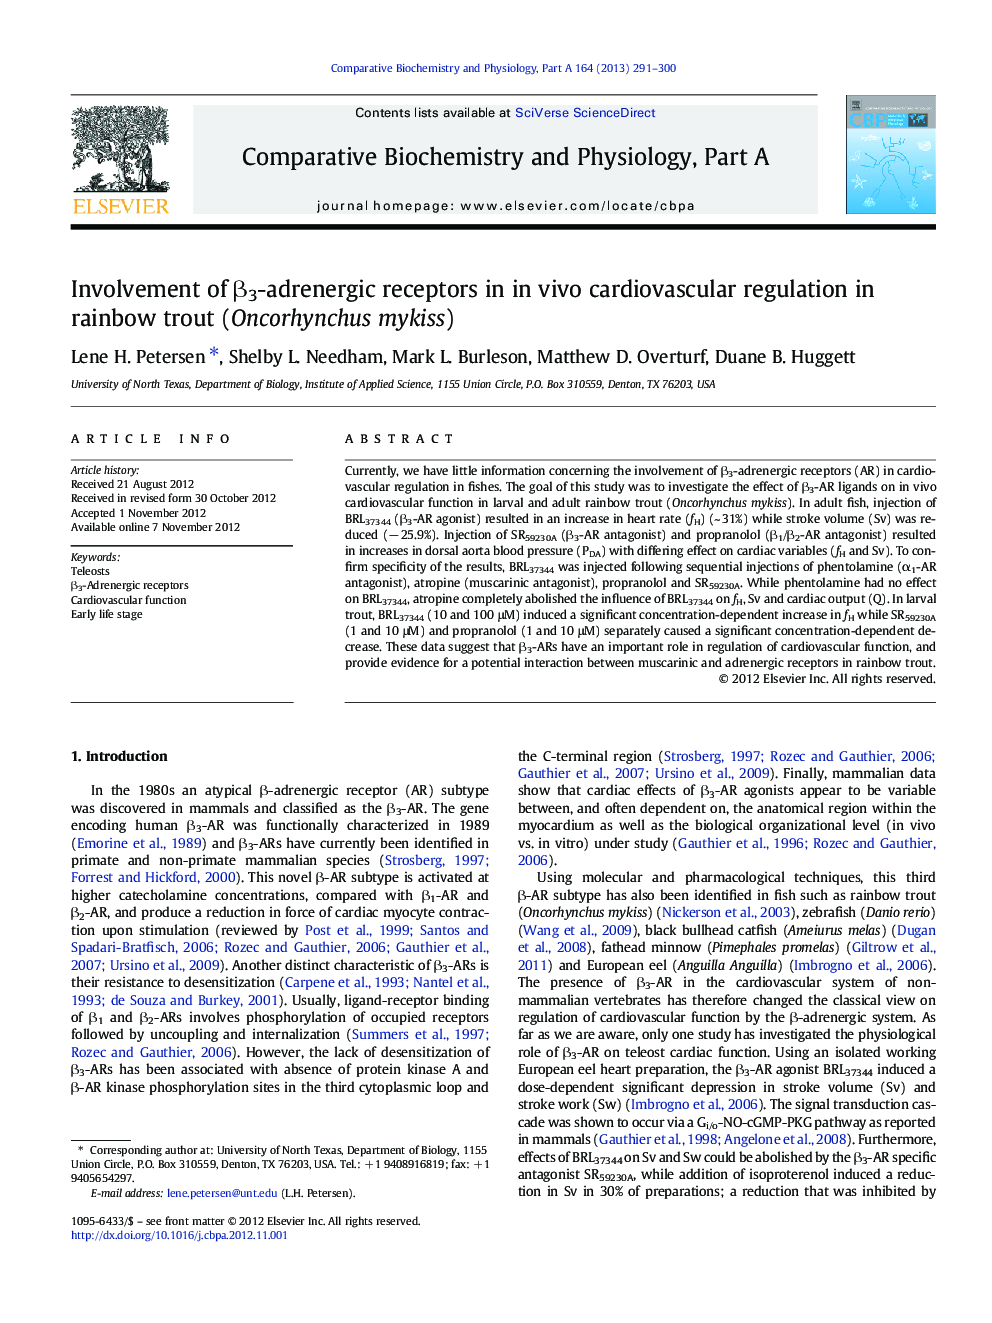 Involvement of β3-adrenergic receptors in in vivo cardiovascular regulation in rainbow trout (Oncorhynchus mykiss)